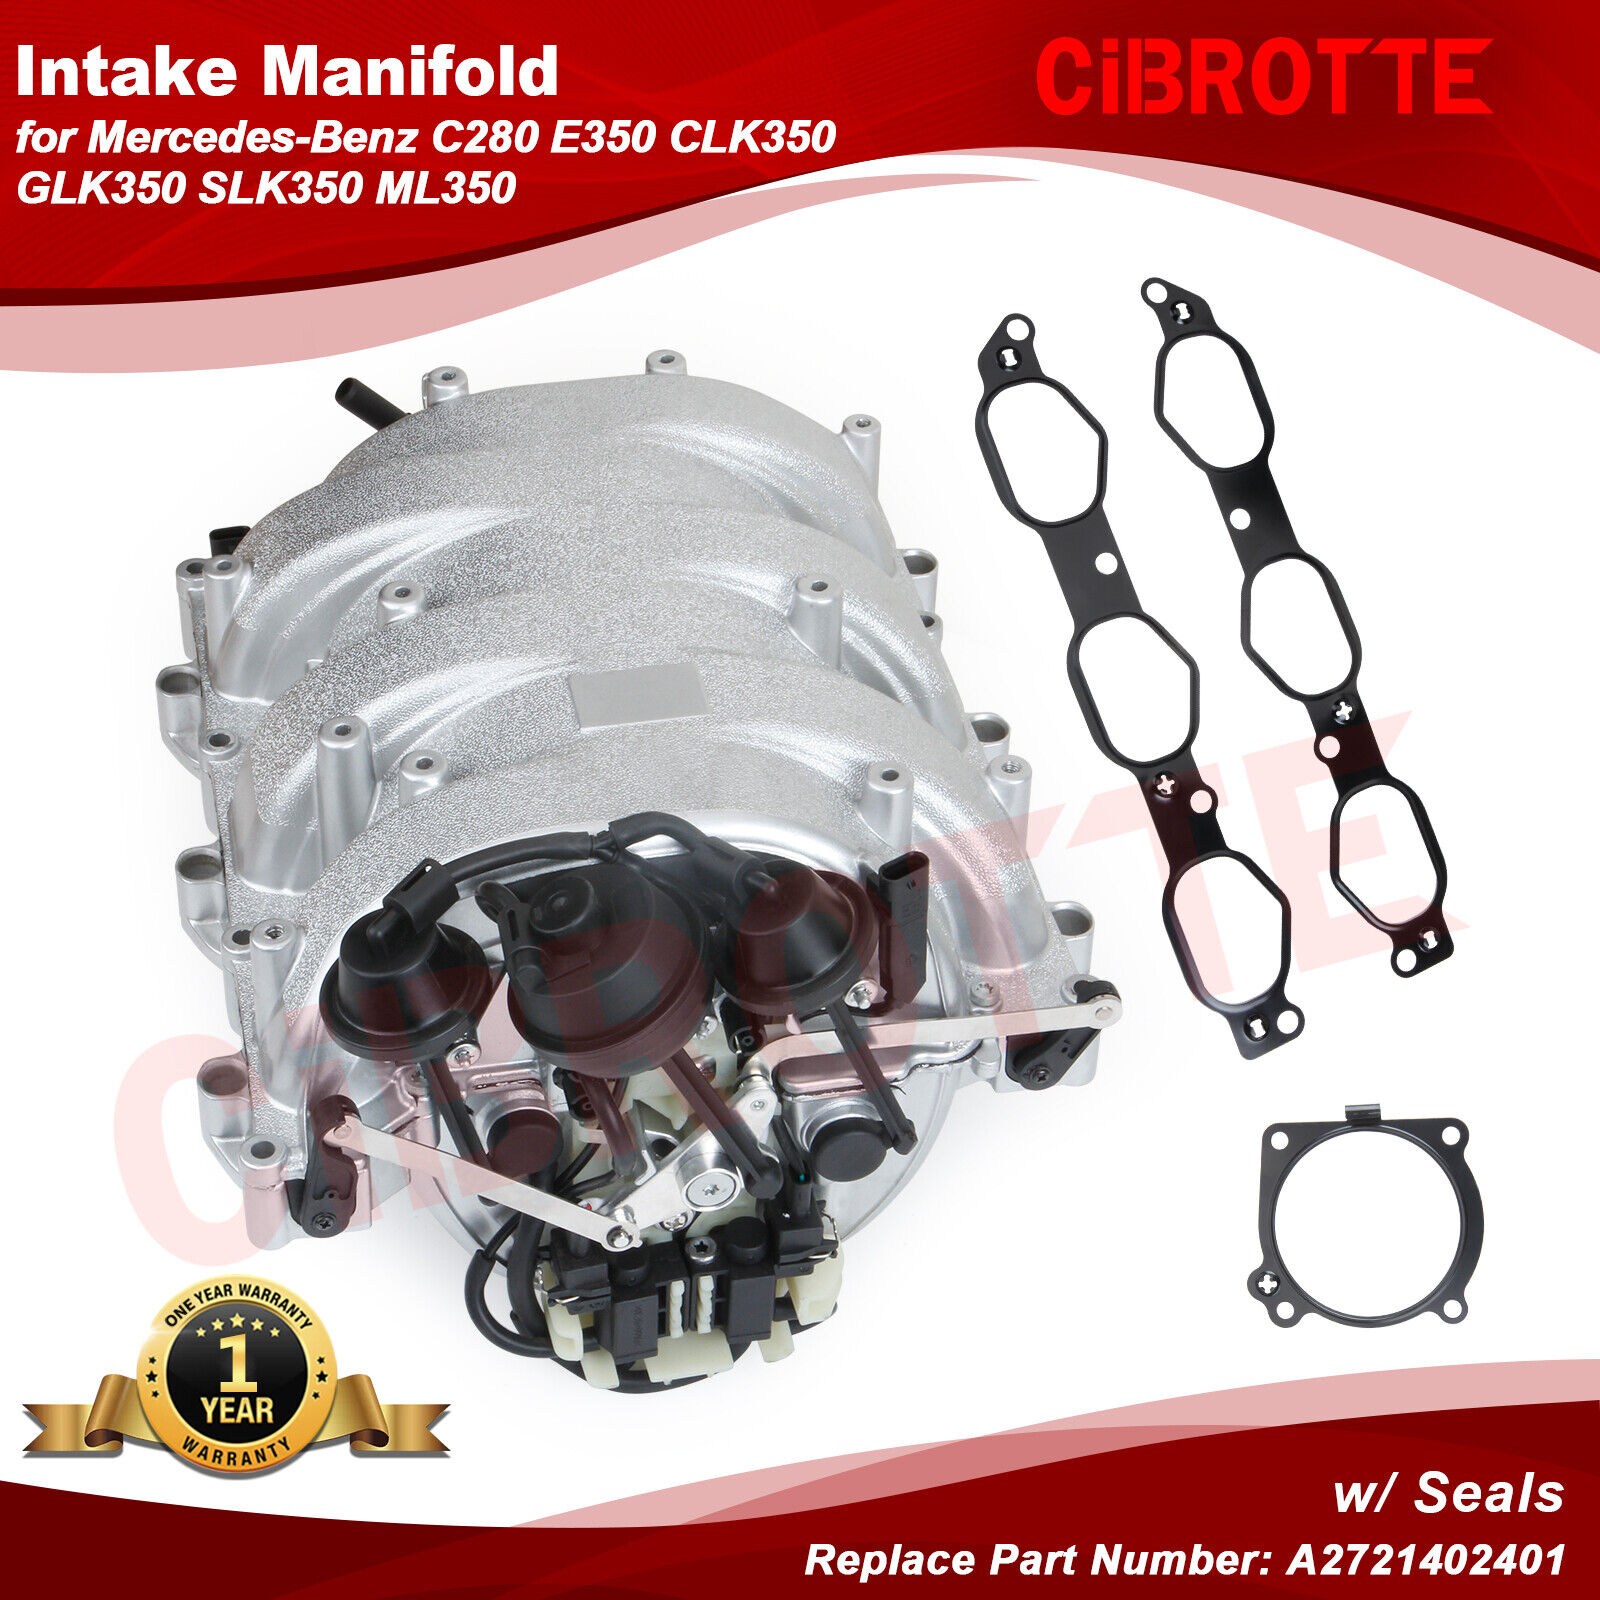 Intake Manifold Assembly for Mercedes-Benz C280 E350 CLK350 GLK350 SLK350 ML350